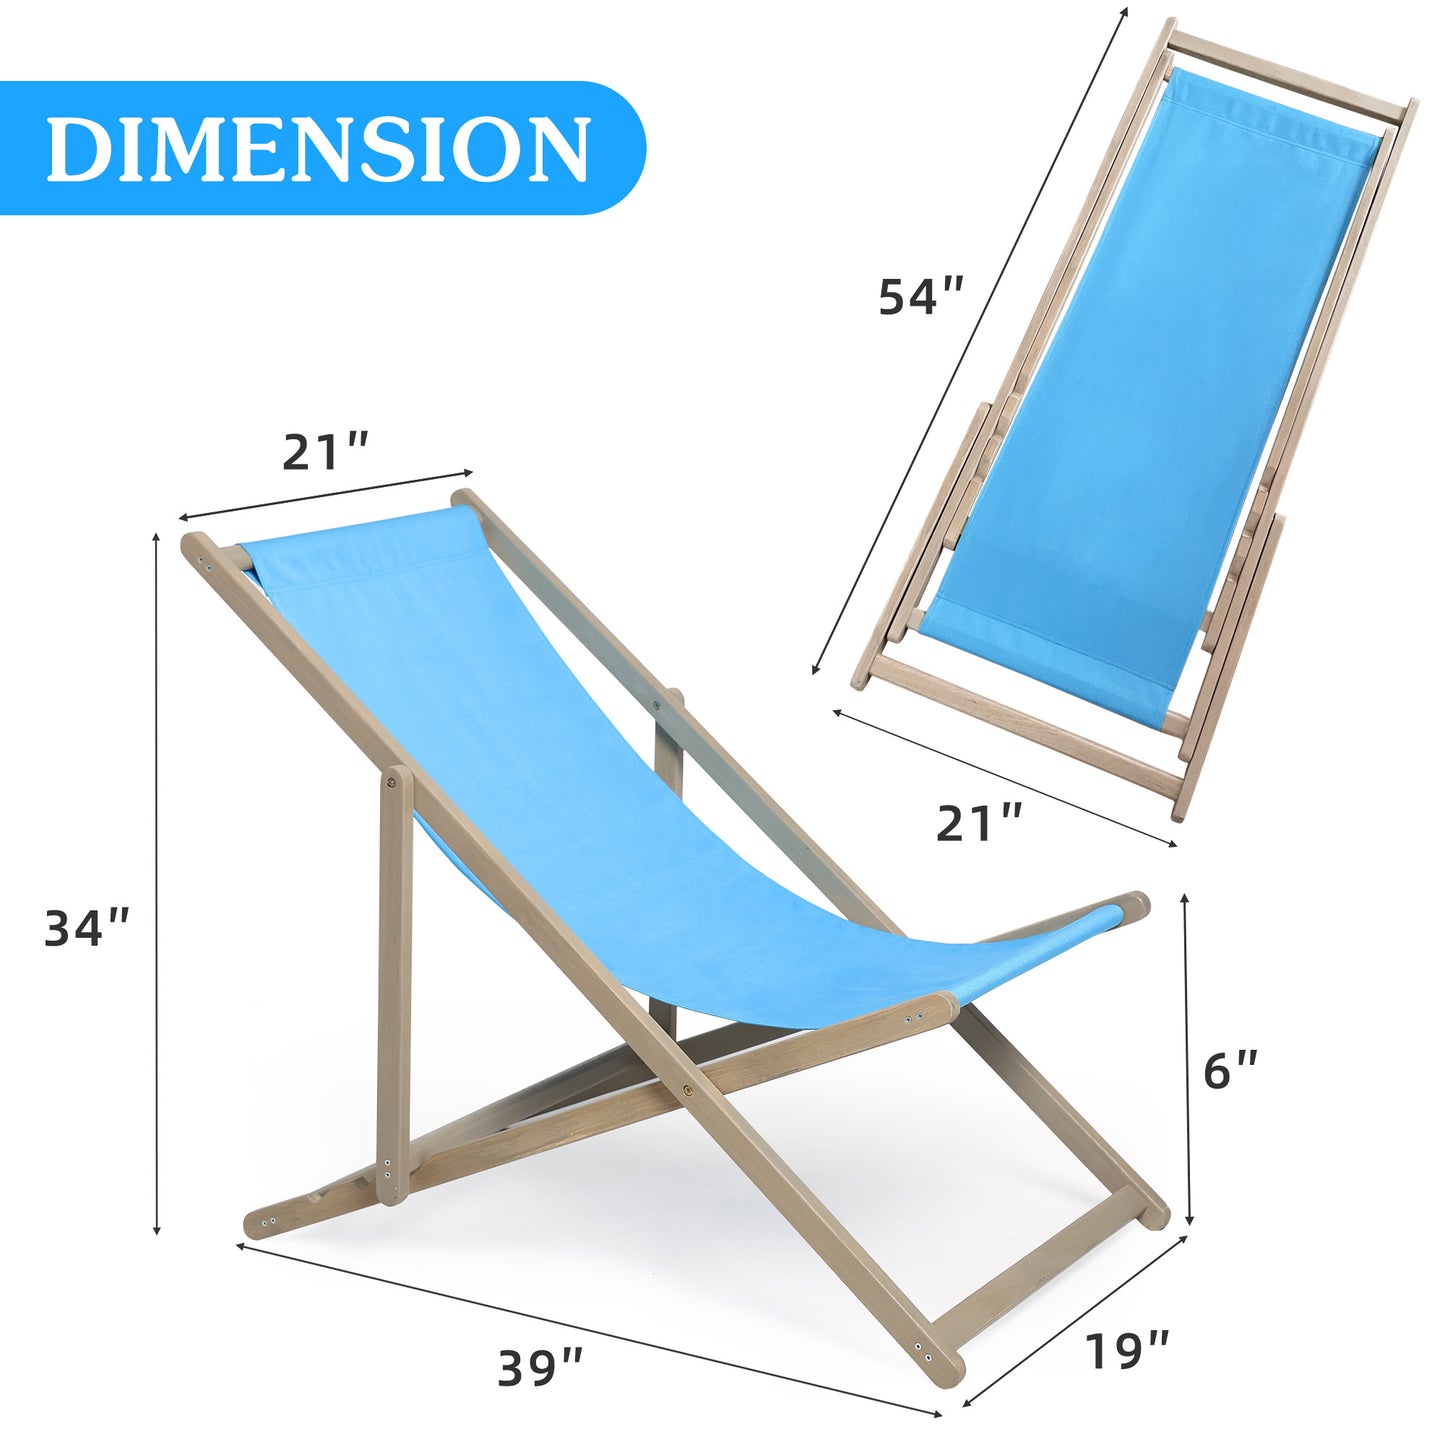 Beach Sling Lounge Chair Set of 2 (blue)